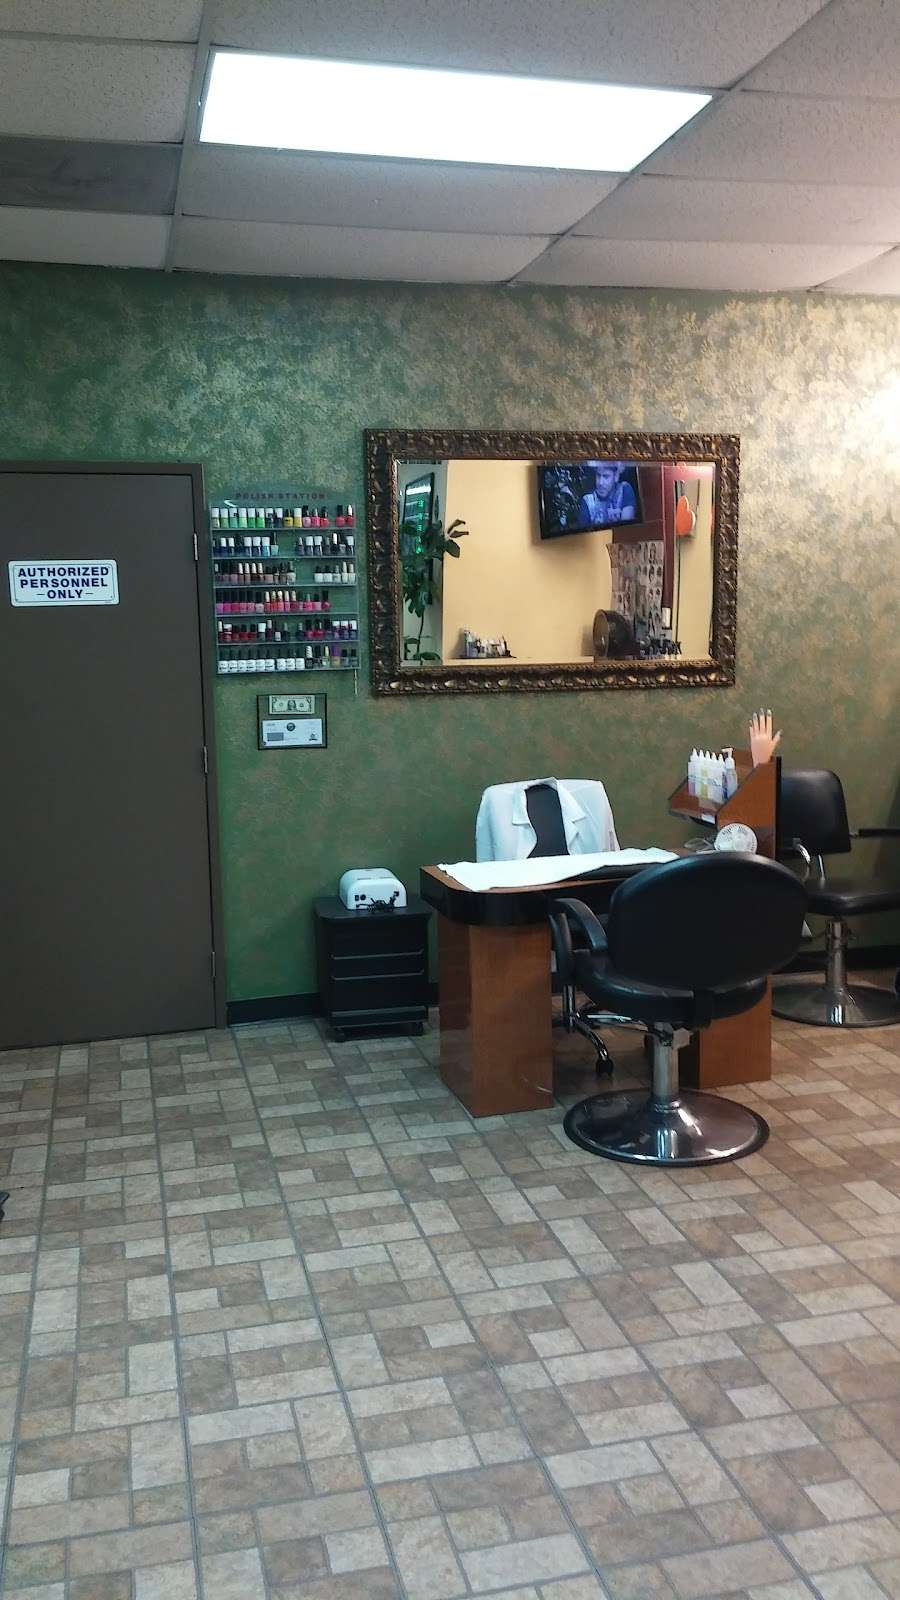 Elegant Beauty Salon & Barber Shop | 14318 Telegraph Rd, Whittier, CA 90604 | Phone: (562) 228-6982